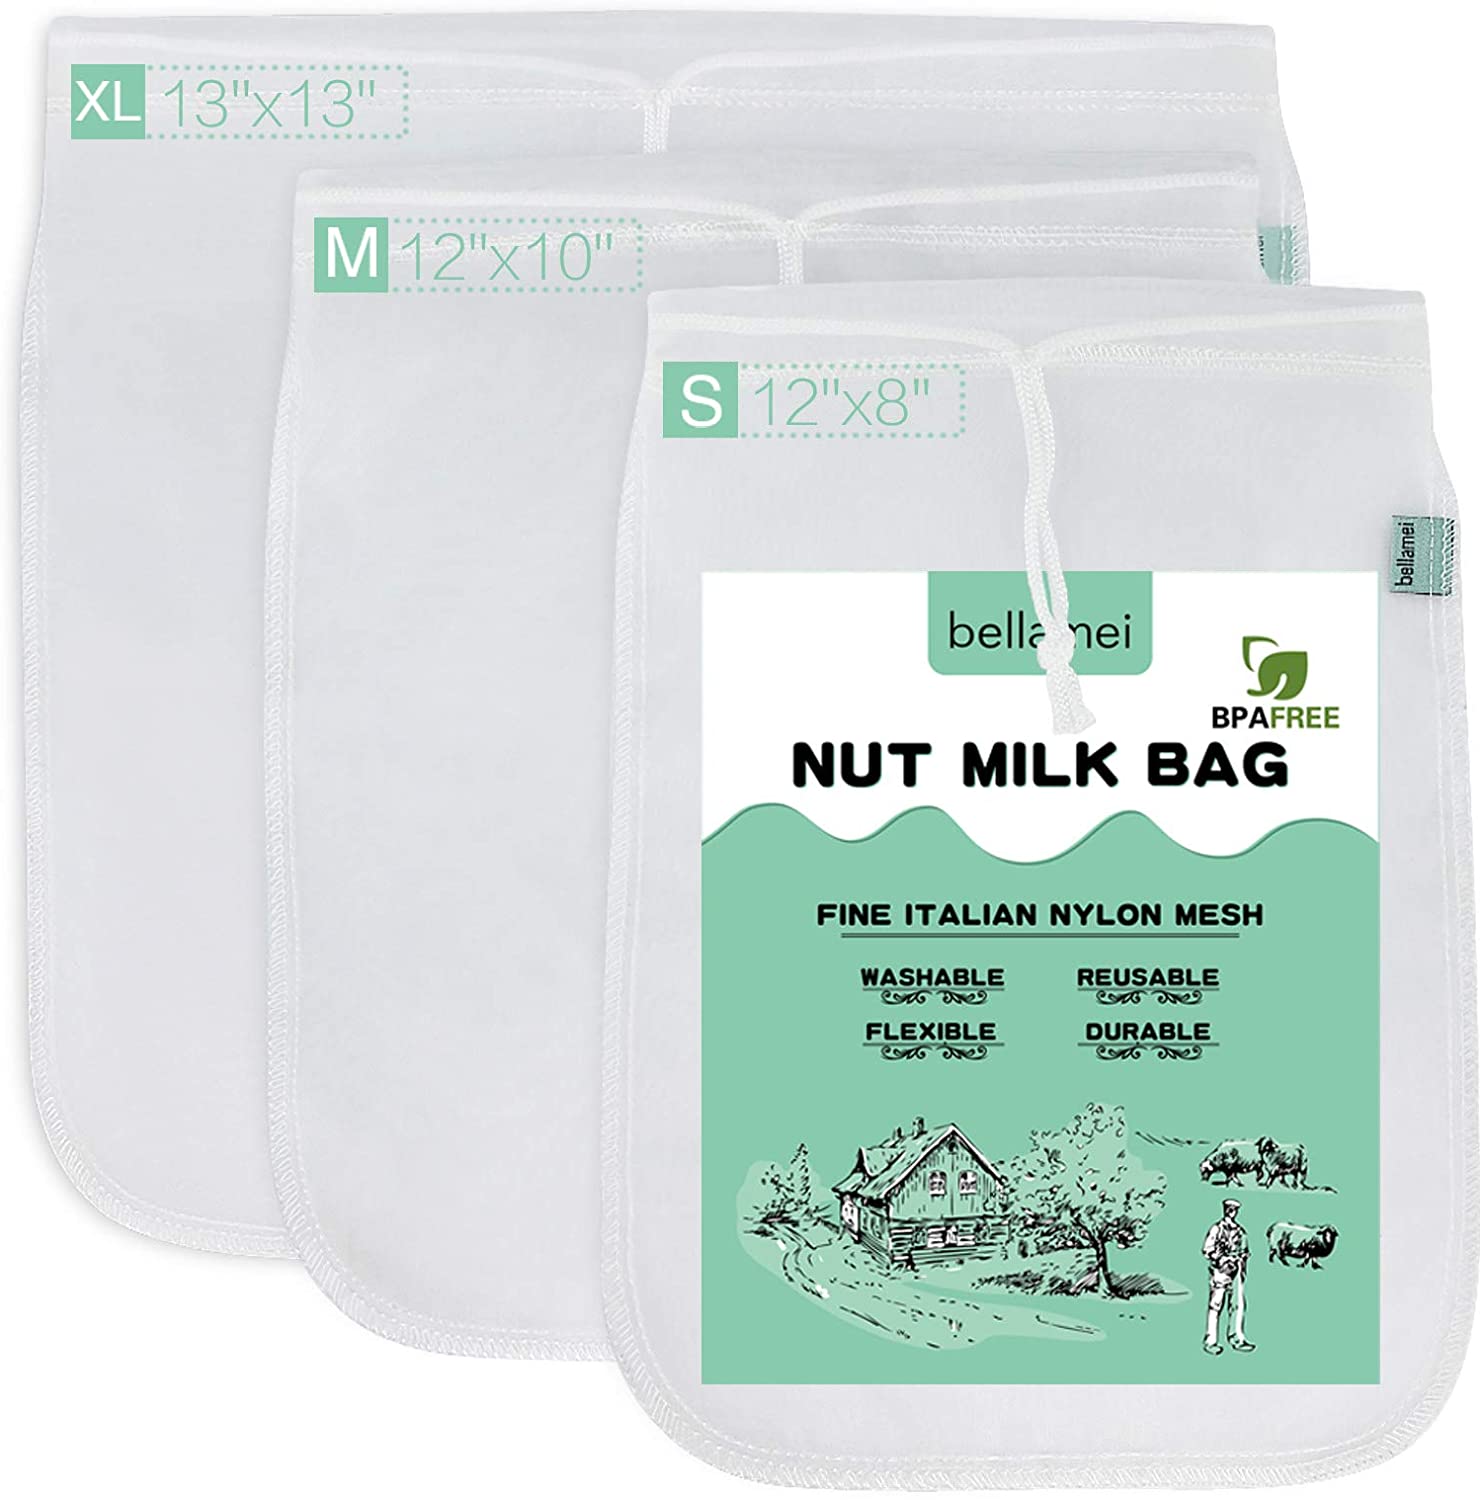 Bellamei Washable Reusable Nylon Mesh Nut Bags, 3-Pack